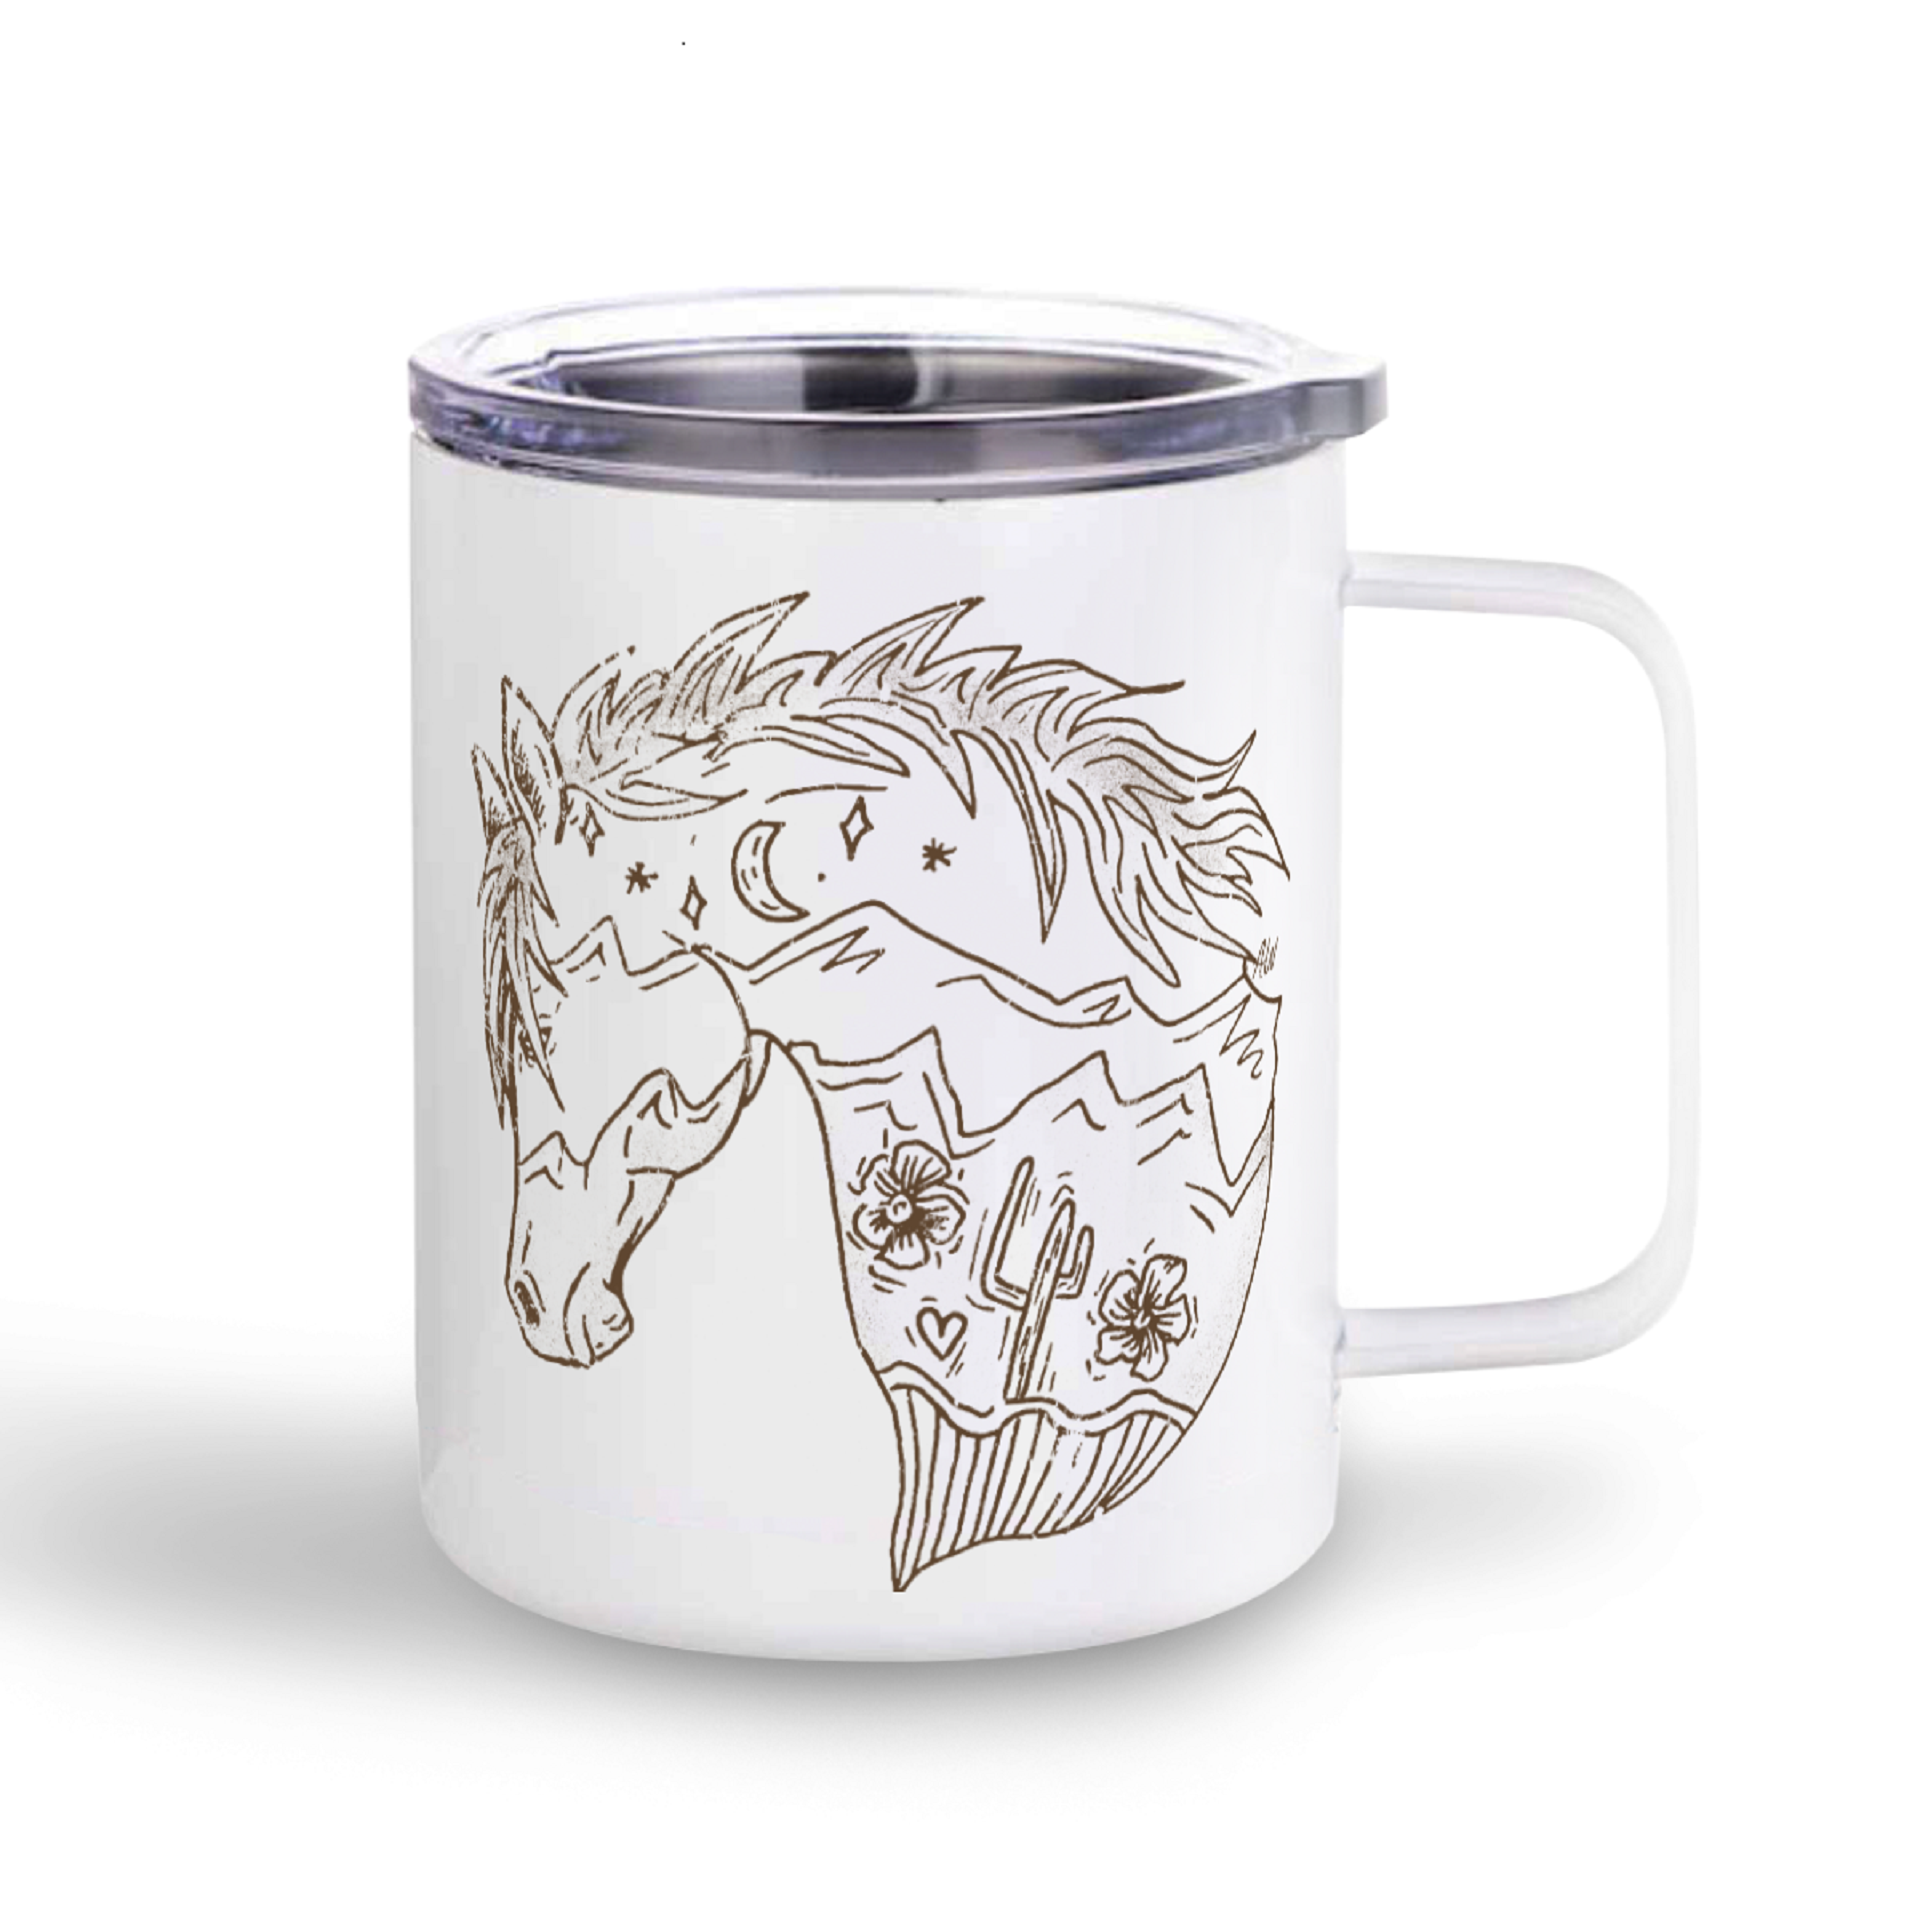 Rustic Pony Sketch Stainless Steel Mug